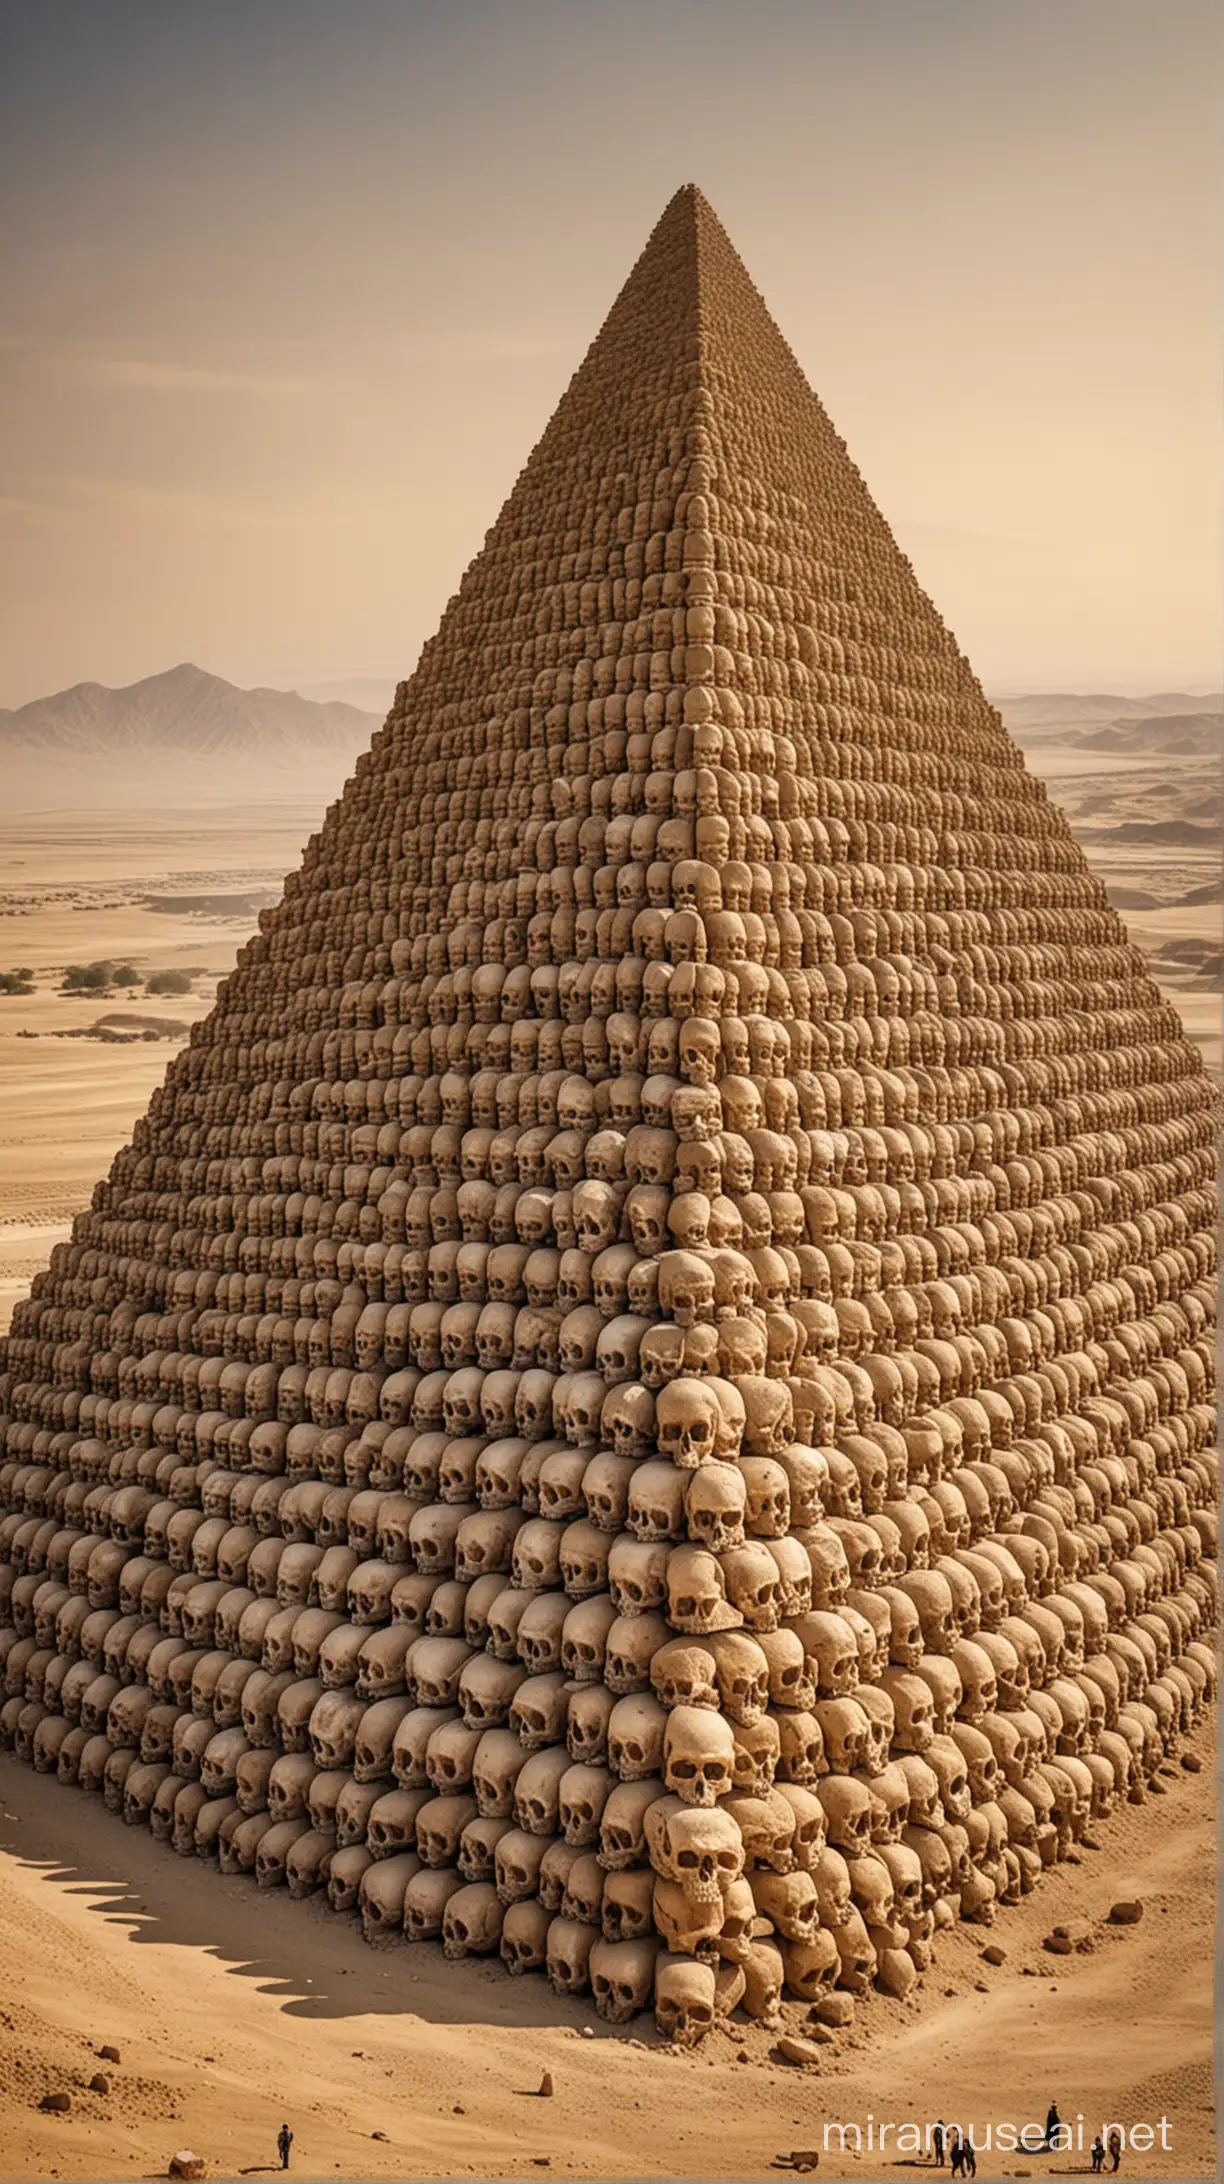 Tamerlanes Pyramid of Skulls in Persia A Monumental Desert Edifice